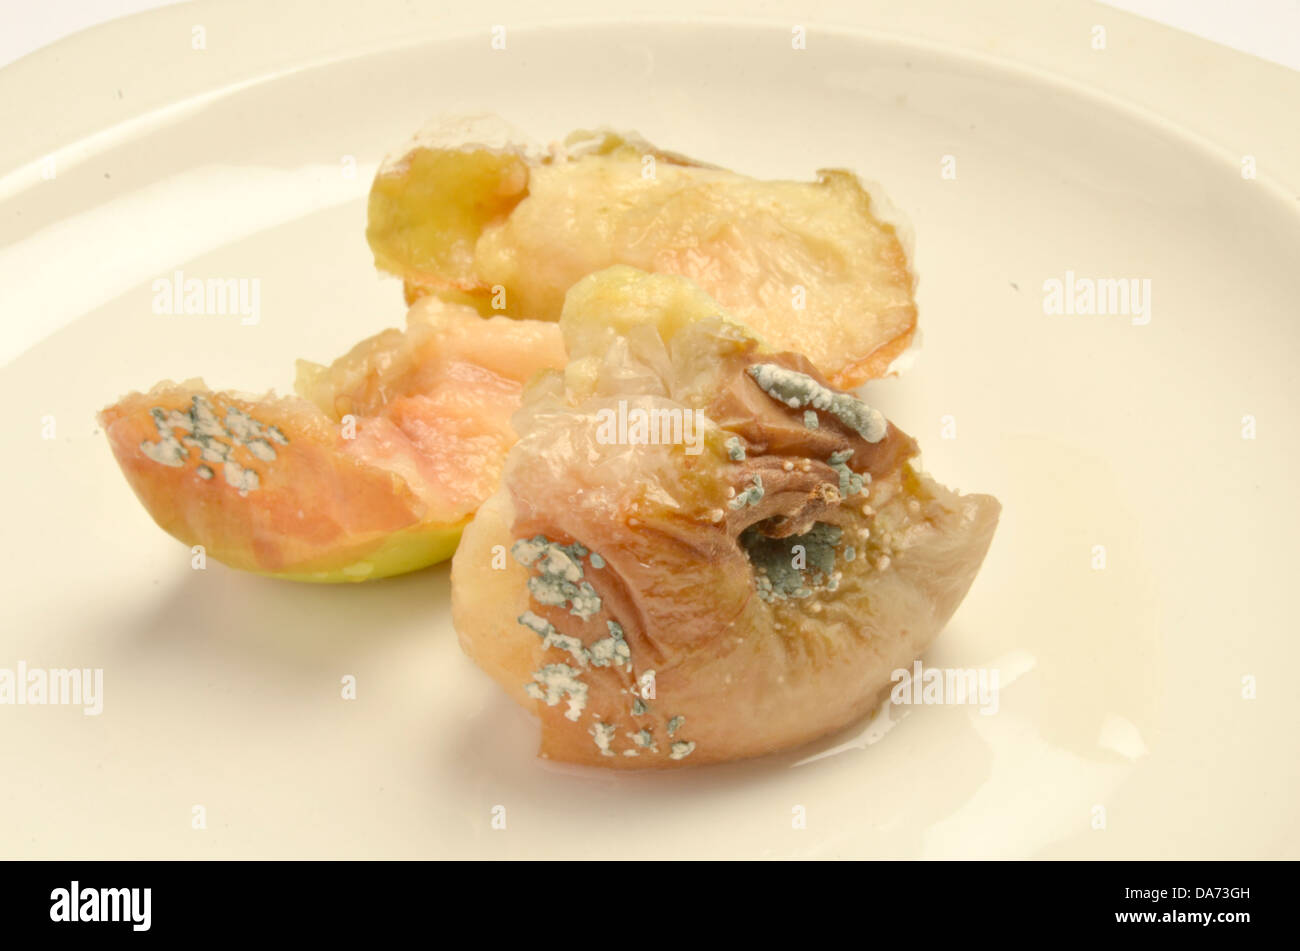 Rotten, moldy apple on a plate. Stock Photo